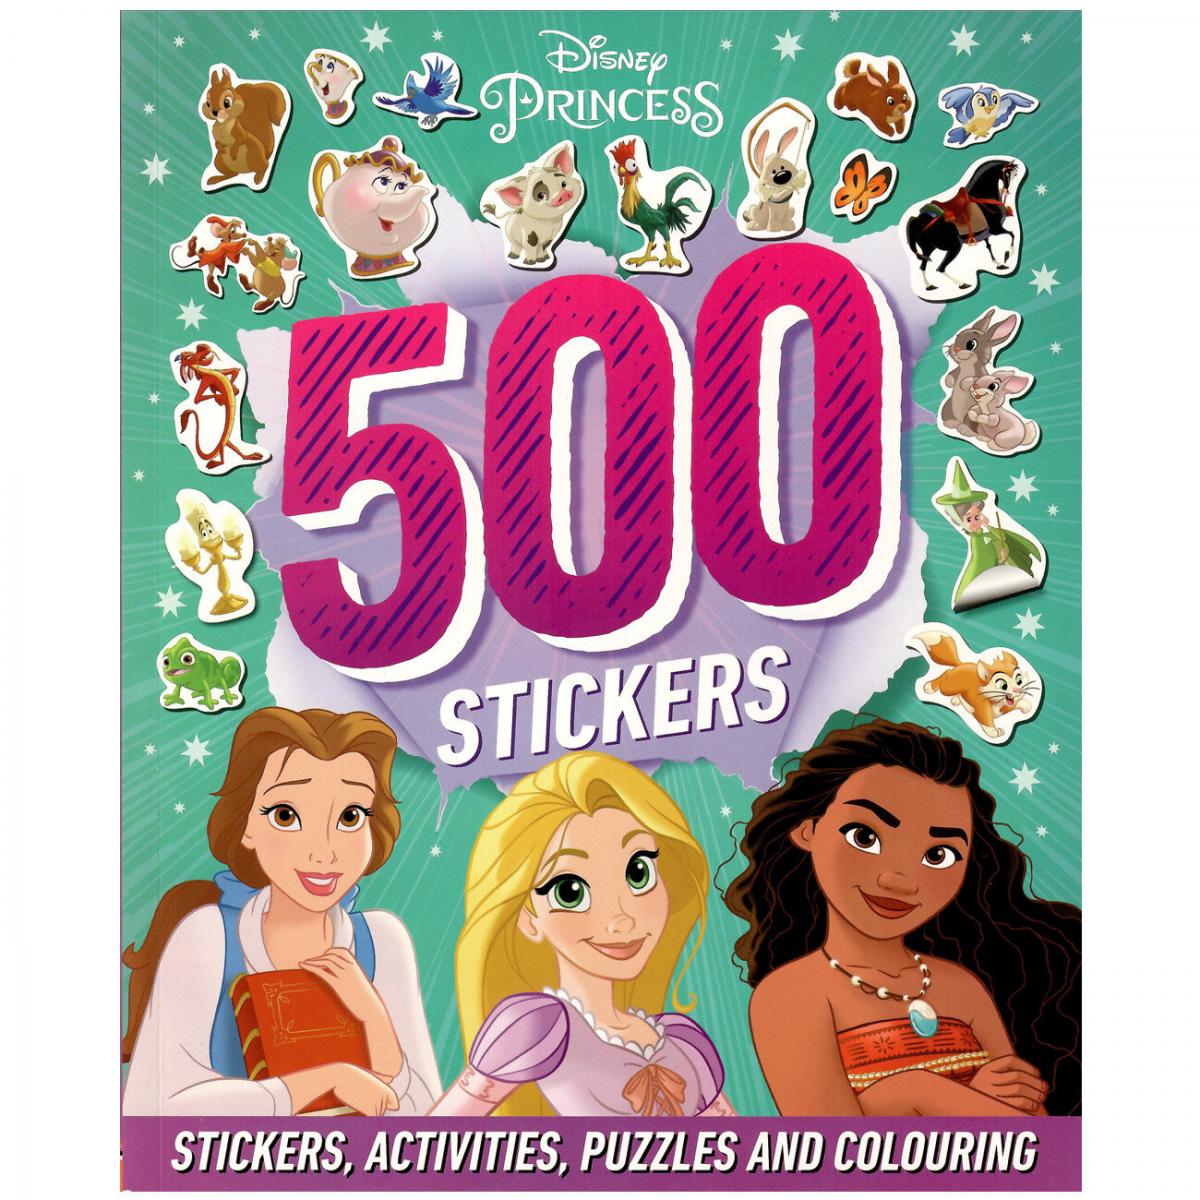 Disney Princess 500 Stickers activity book (parallel)